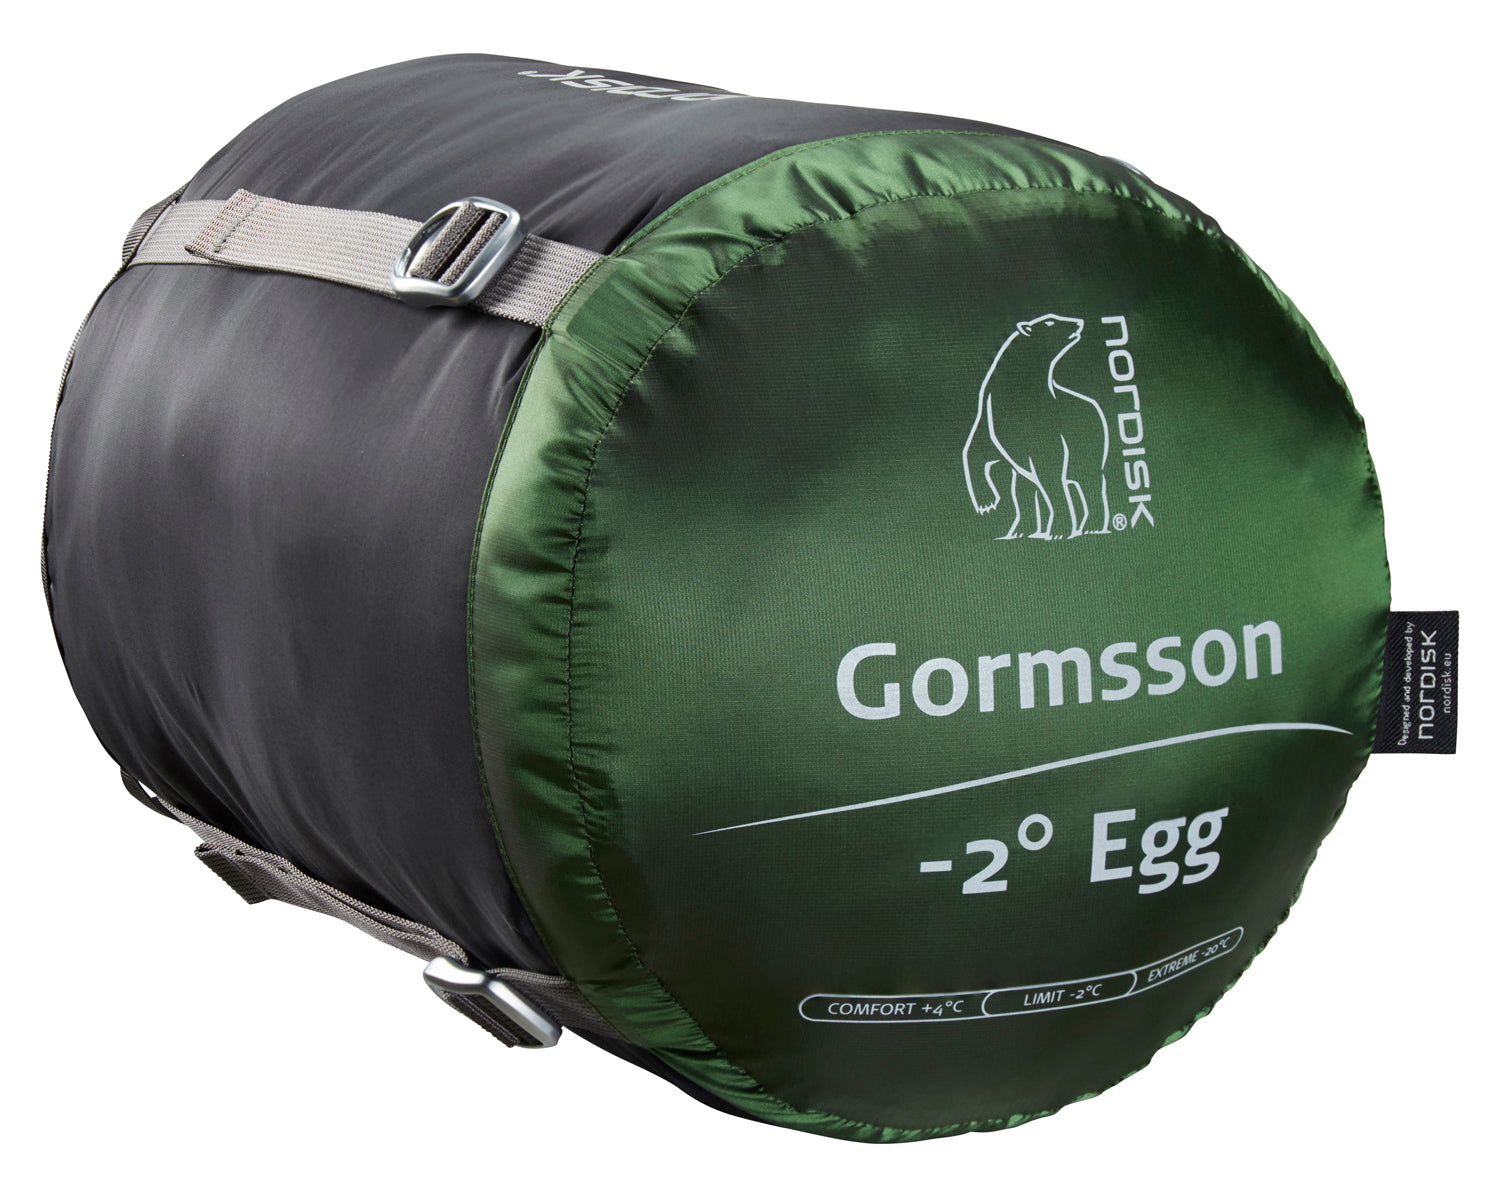 Gormsson -2° Egg  Fibre - Artichoke Green/Mustard Yellow/Black